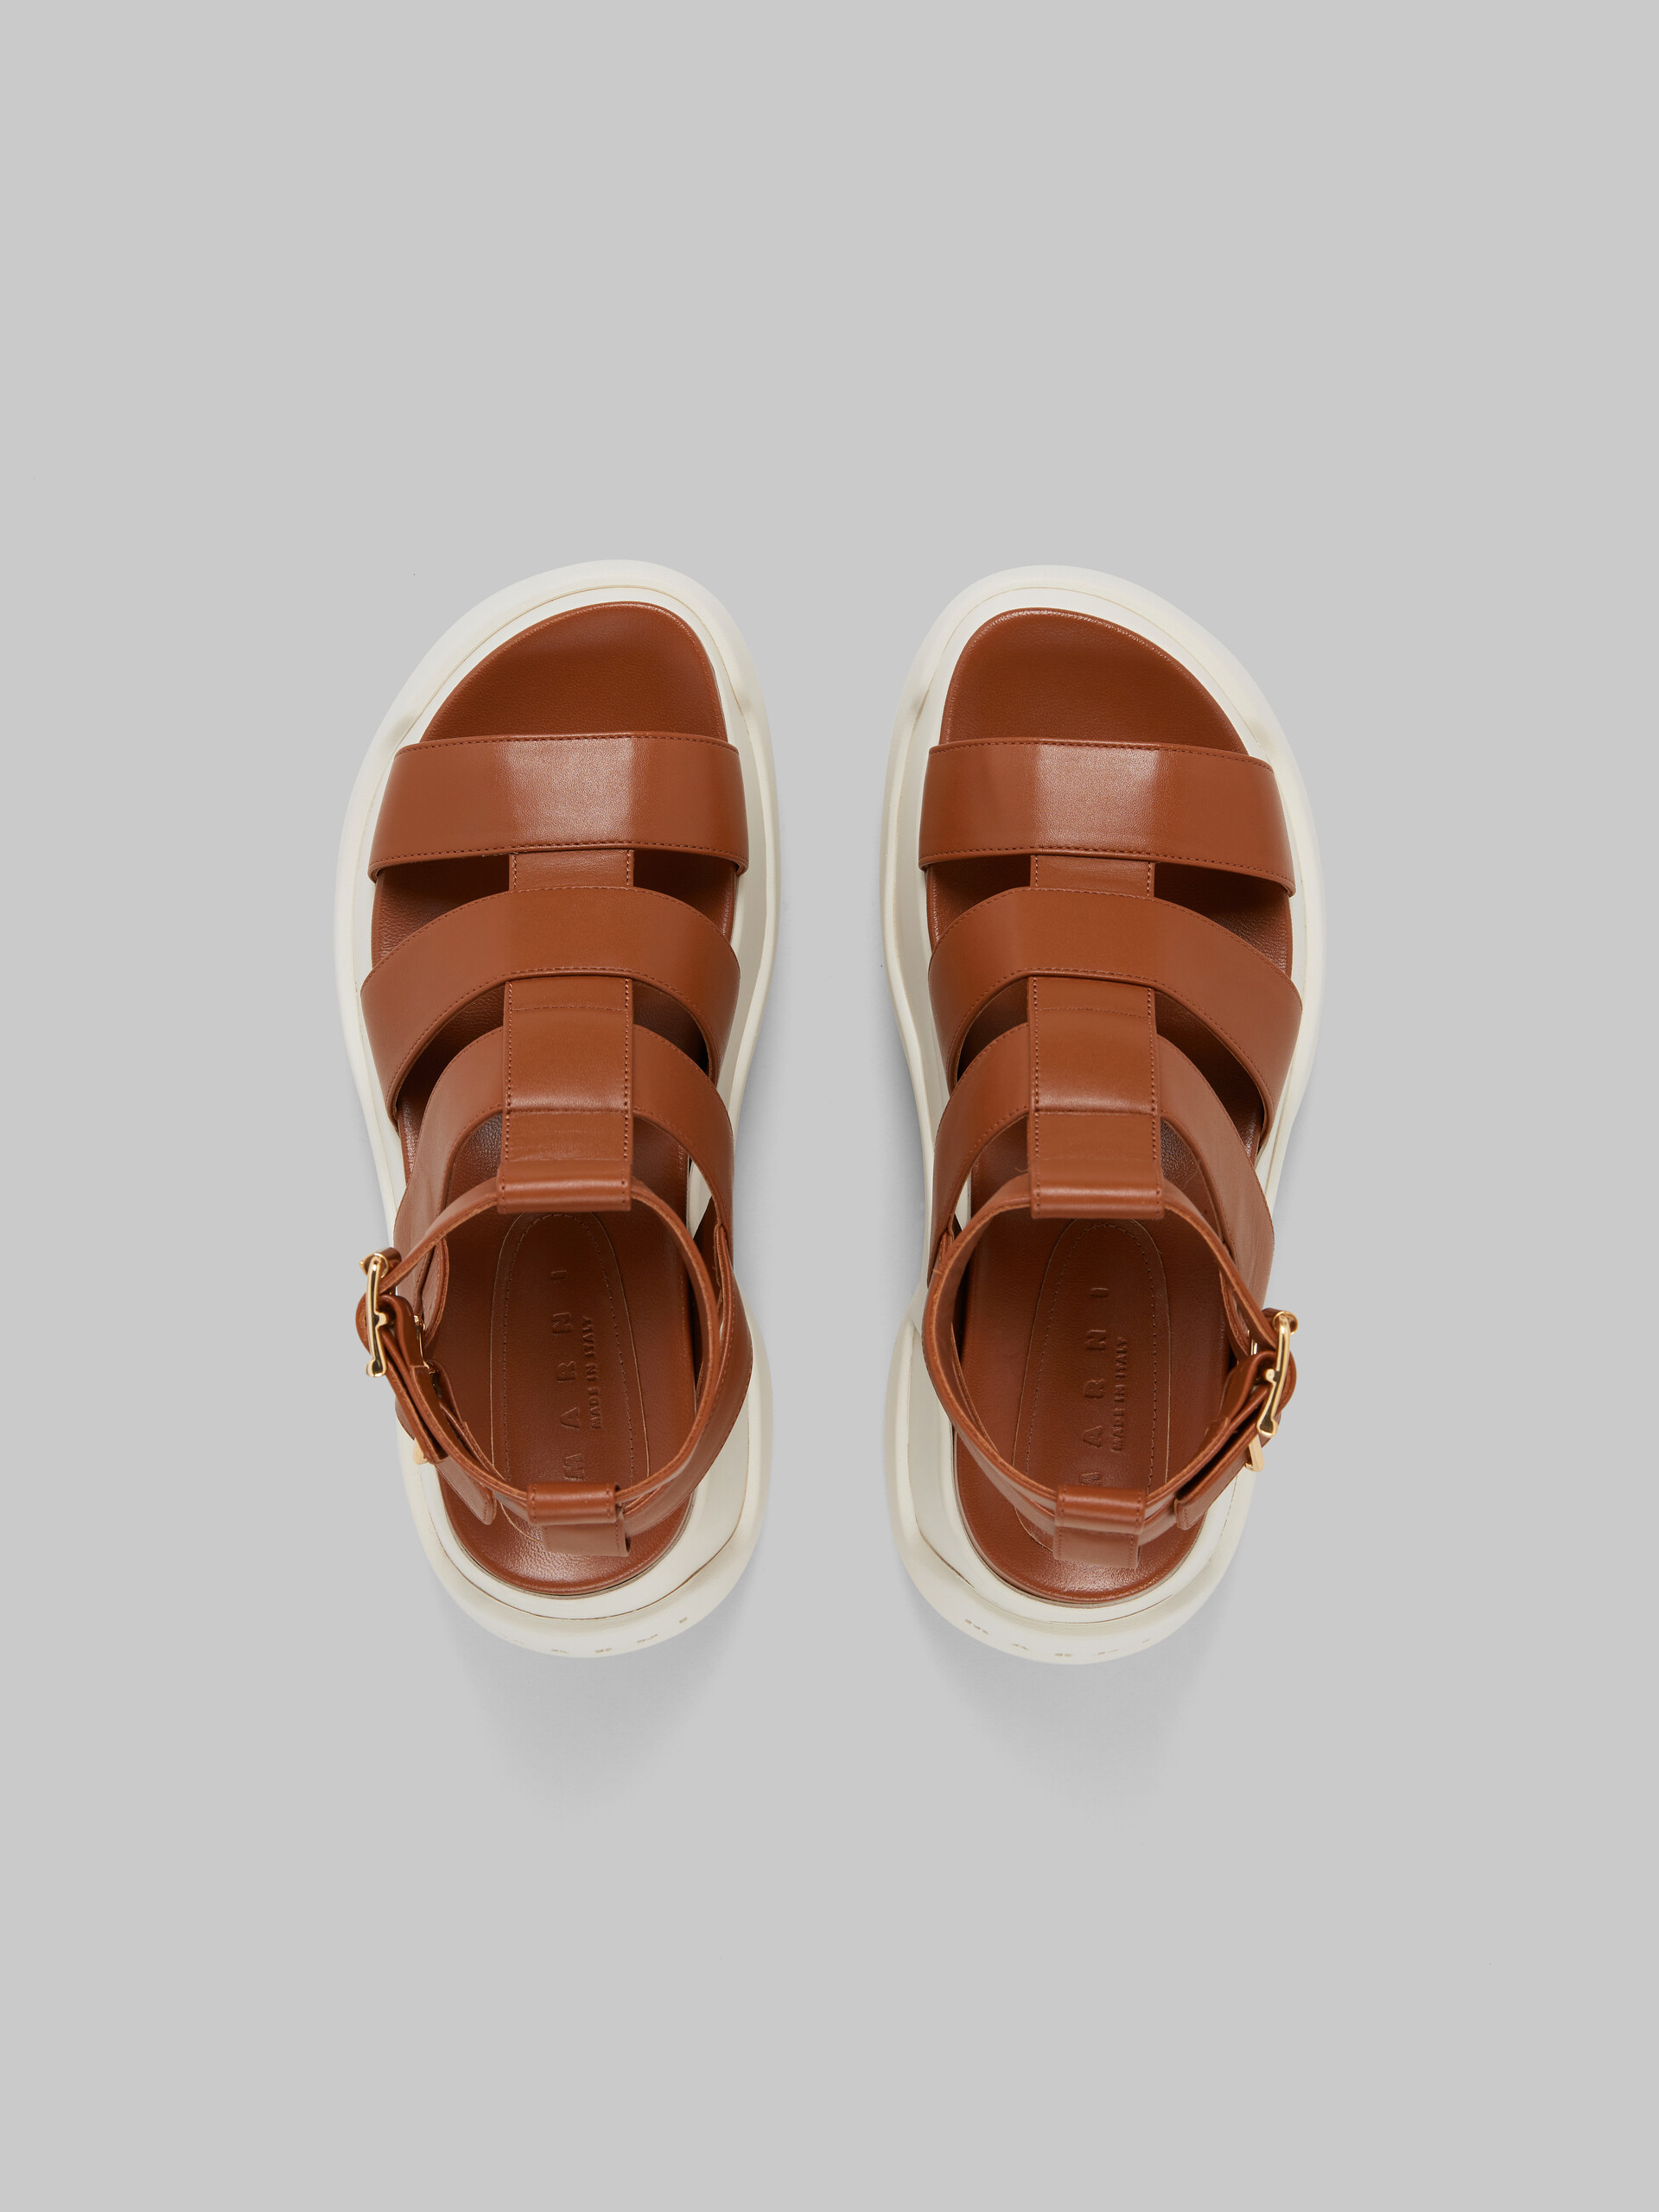 Brown leather gladiator sandal with platform sole - Sandals - Image 4